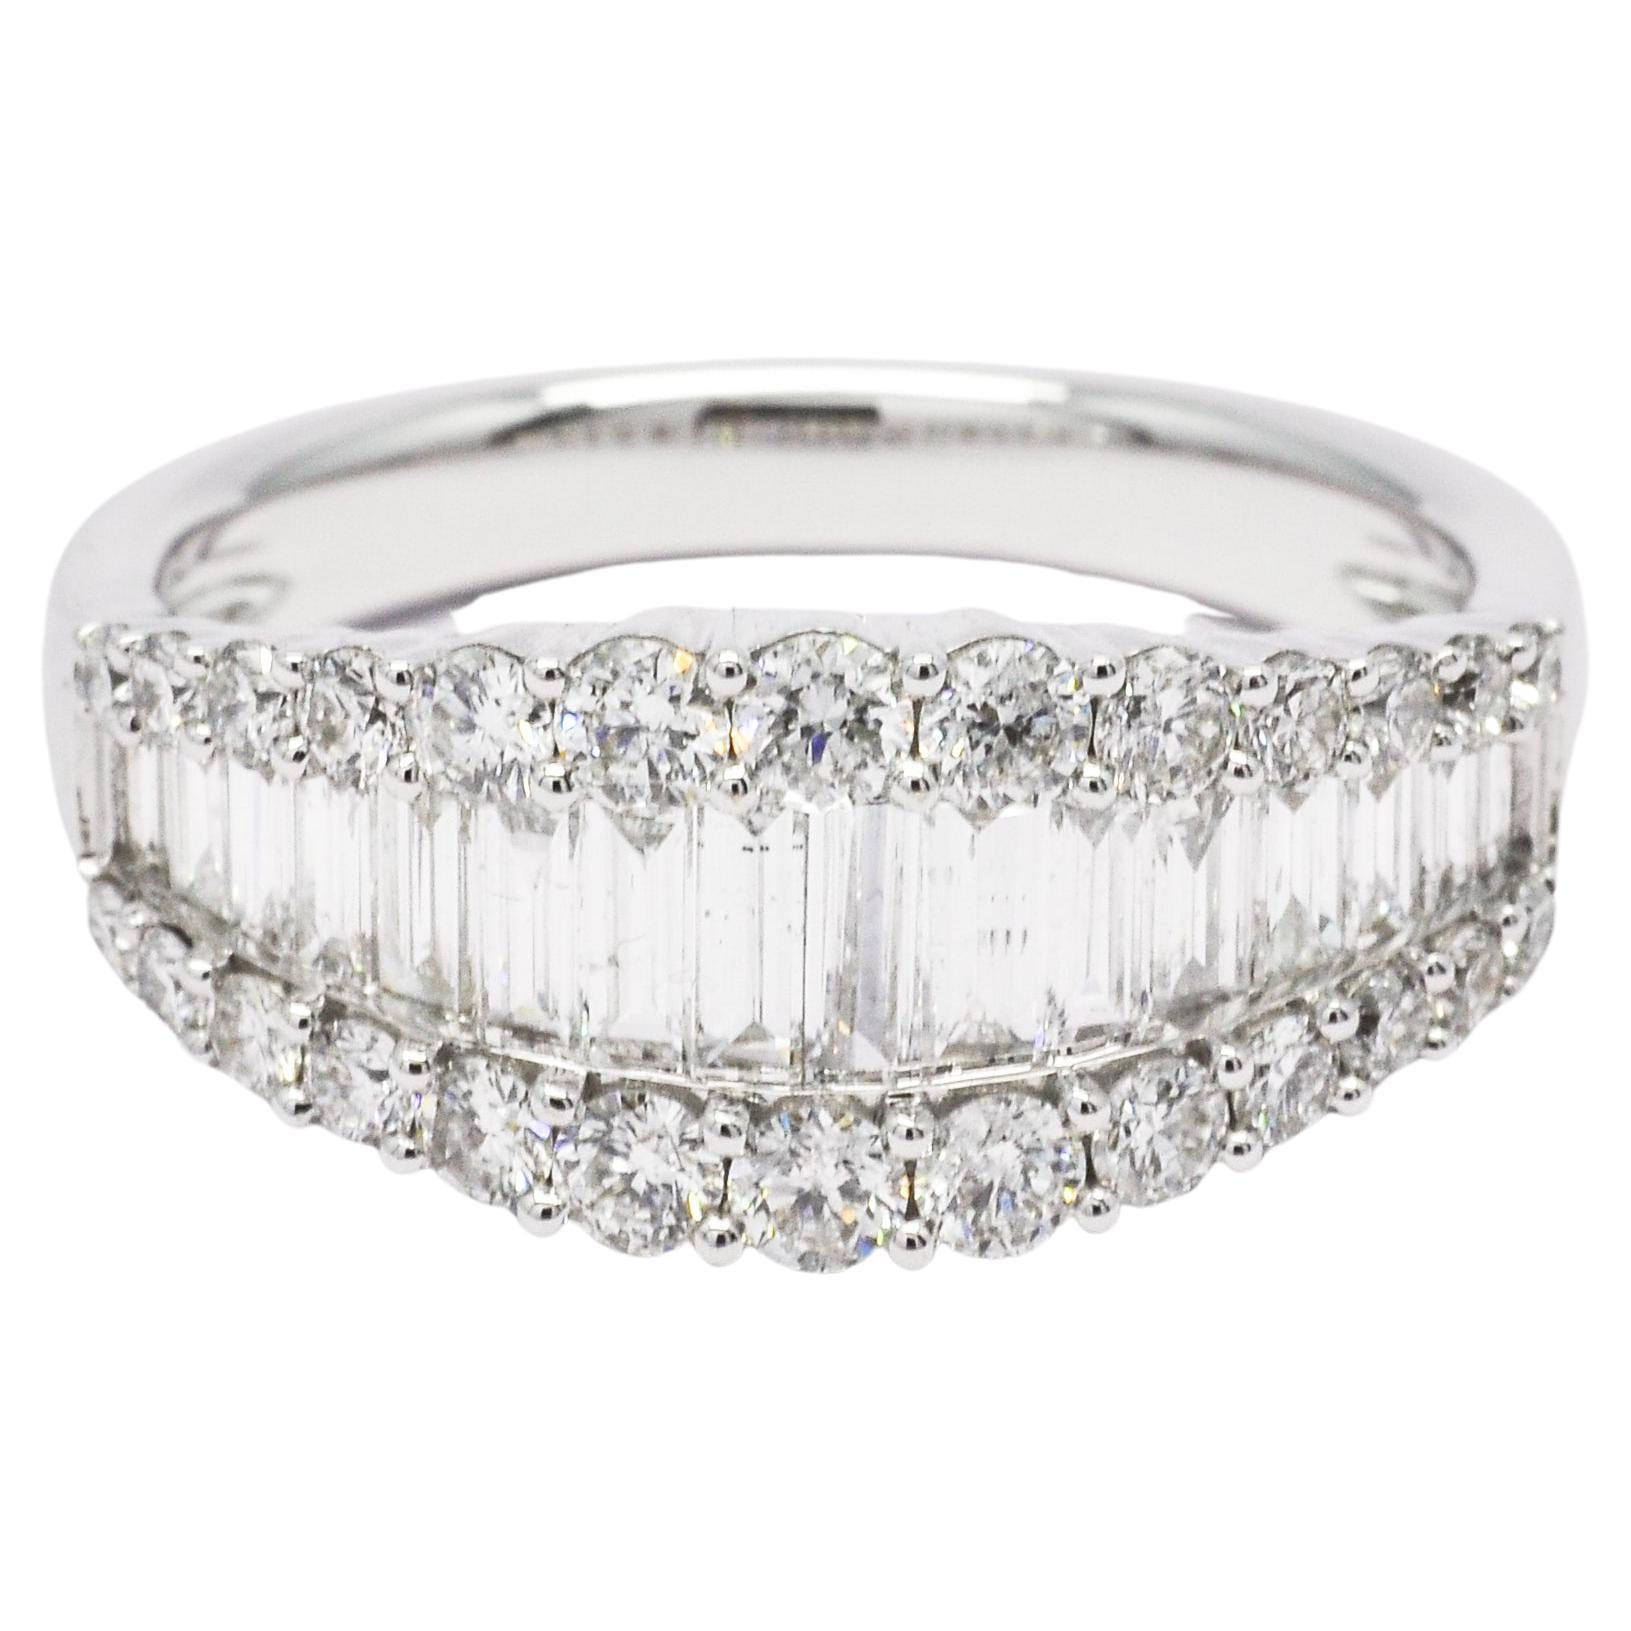 For Sale:  Natural Diamond Ring 1.45 cts 18 Karat White Gold Wedding Anniversary Band